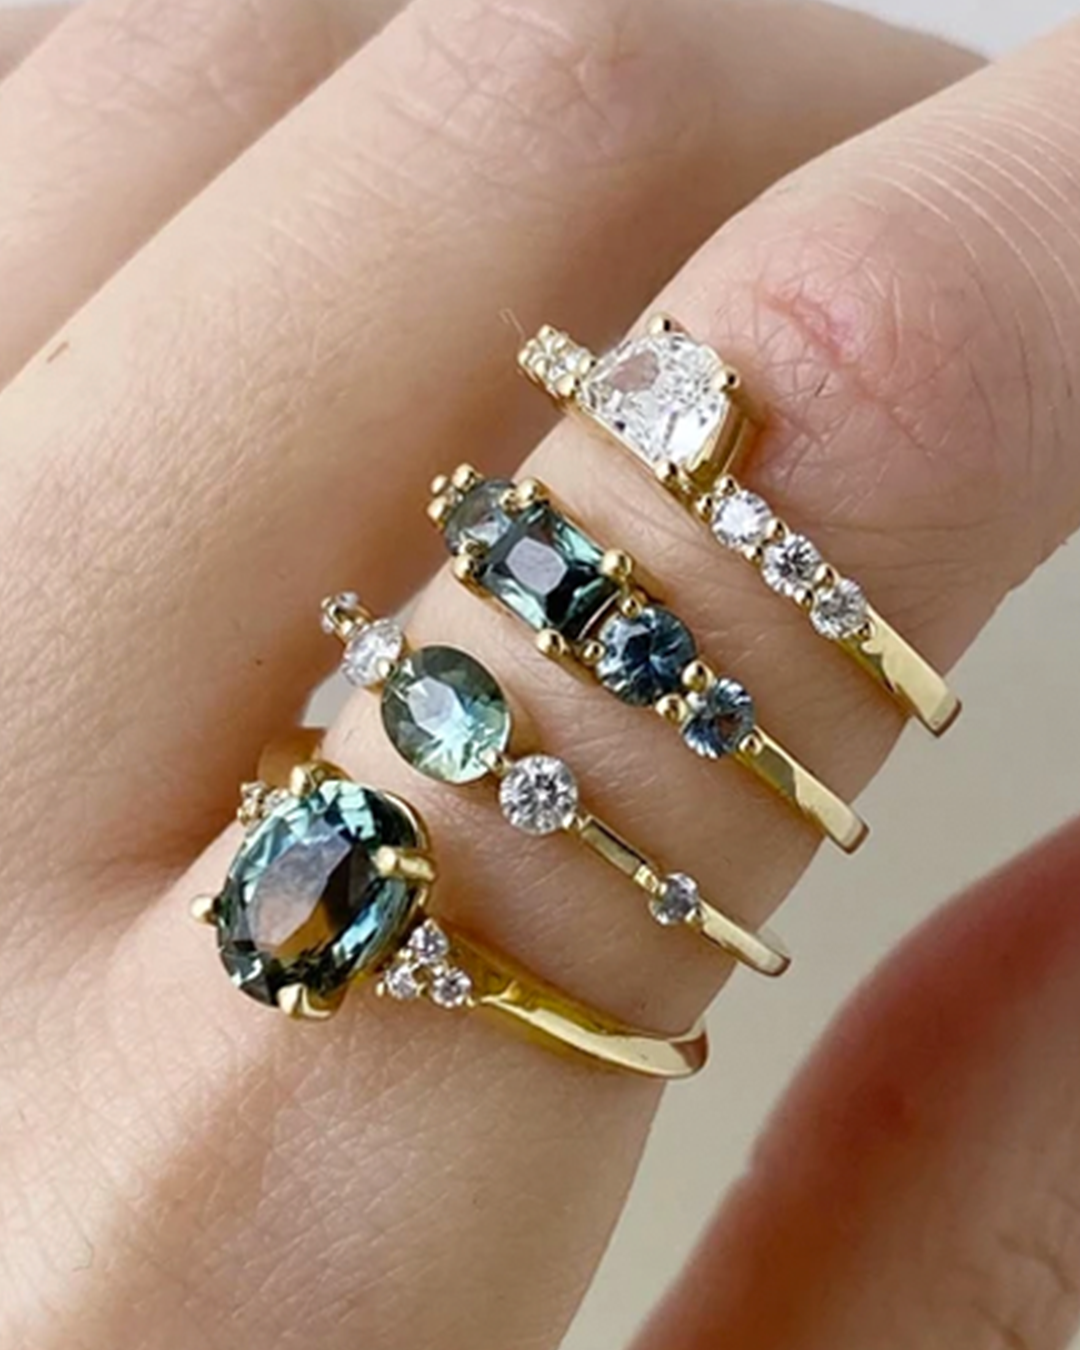 Apollo Ring / Half Moon Diamond Ring By Casual Seance